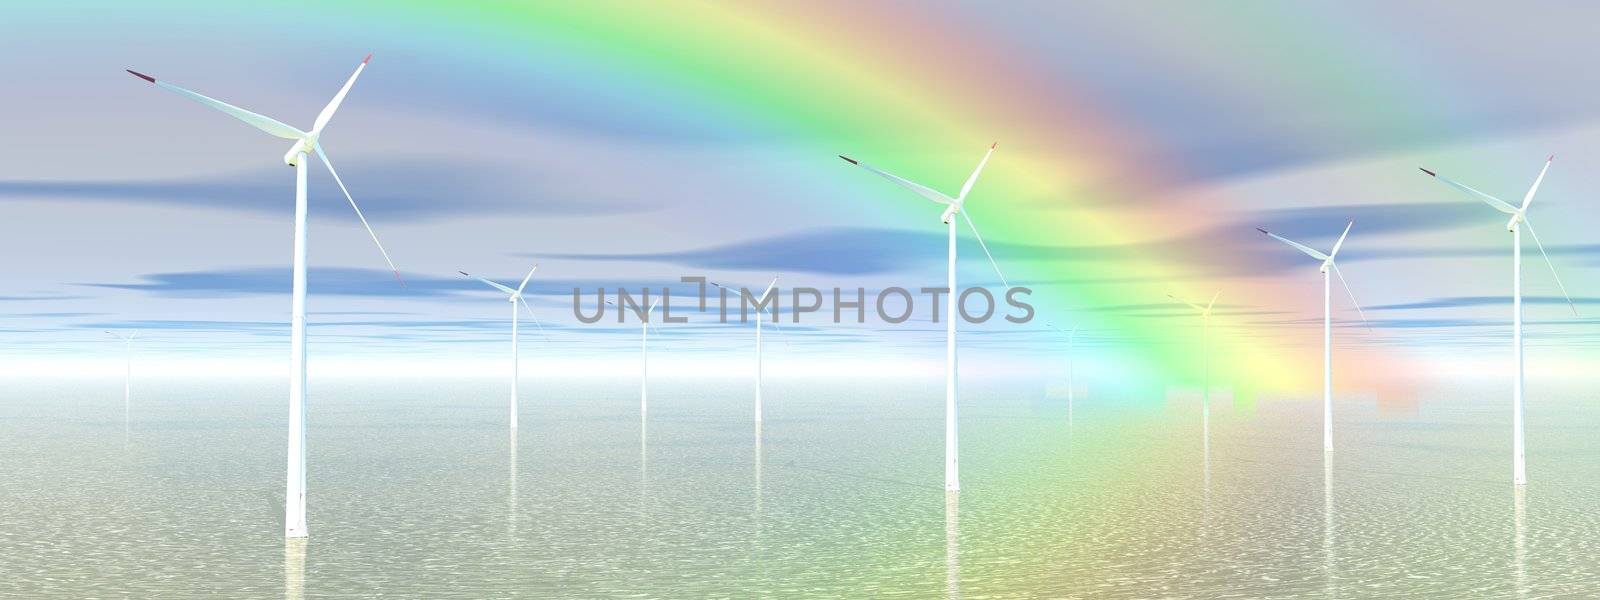 Rainbow and wind turbines by Elenaphotos21